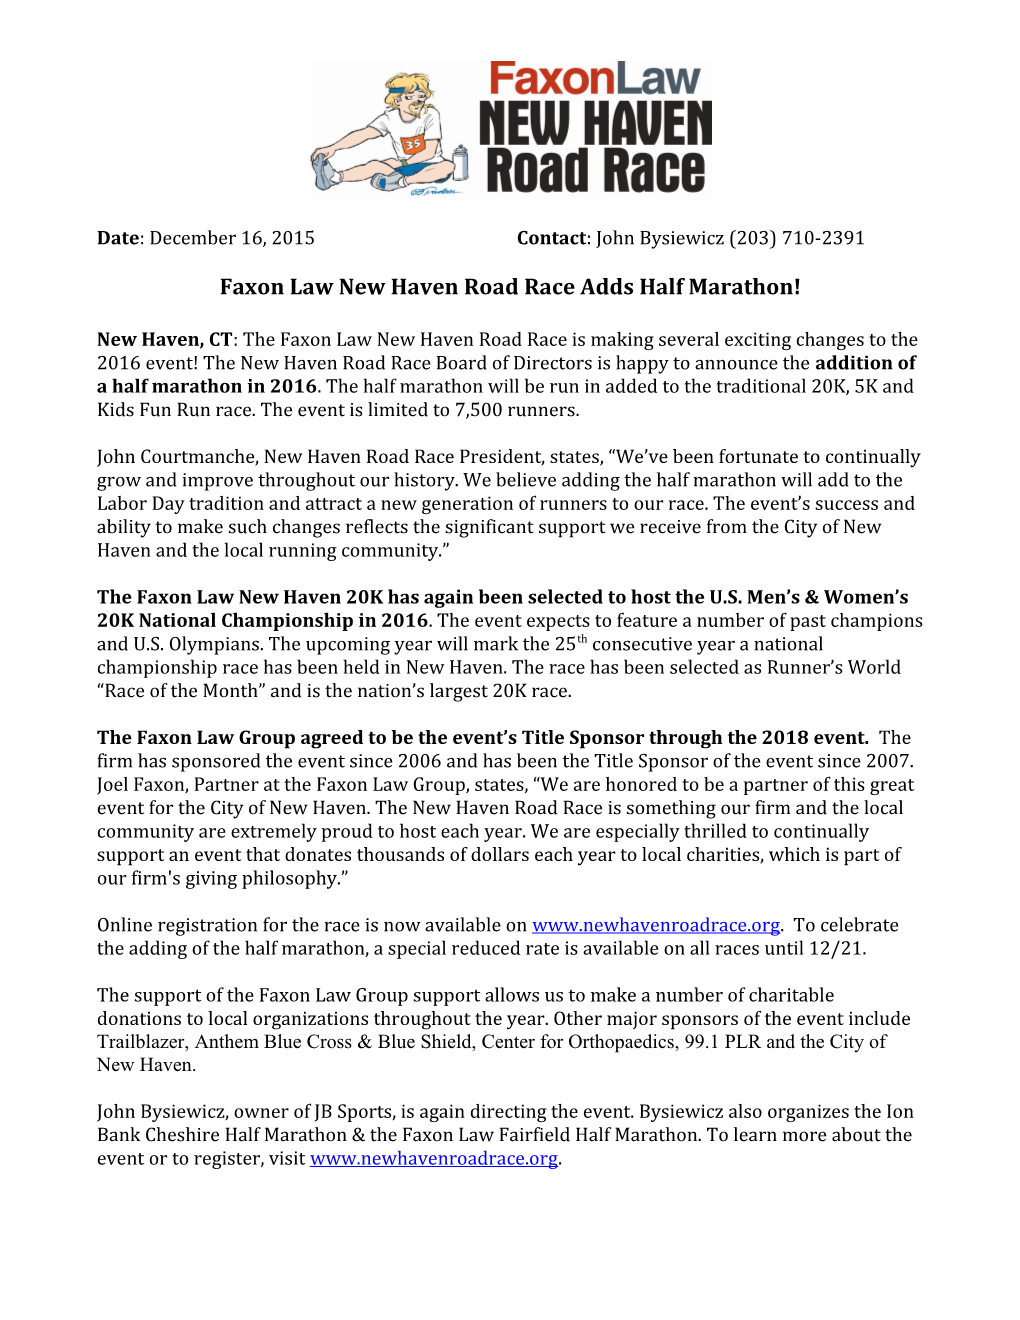 Faxon Law New Haven Road Race Adds Halfmarathon!